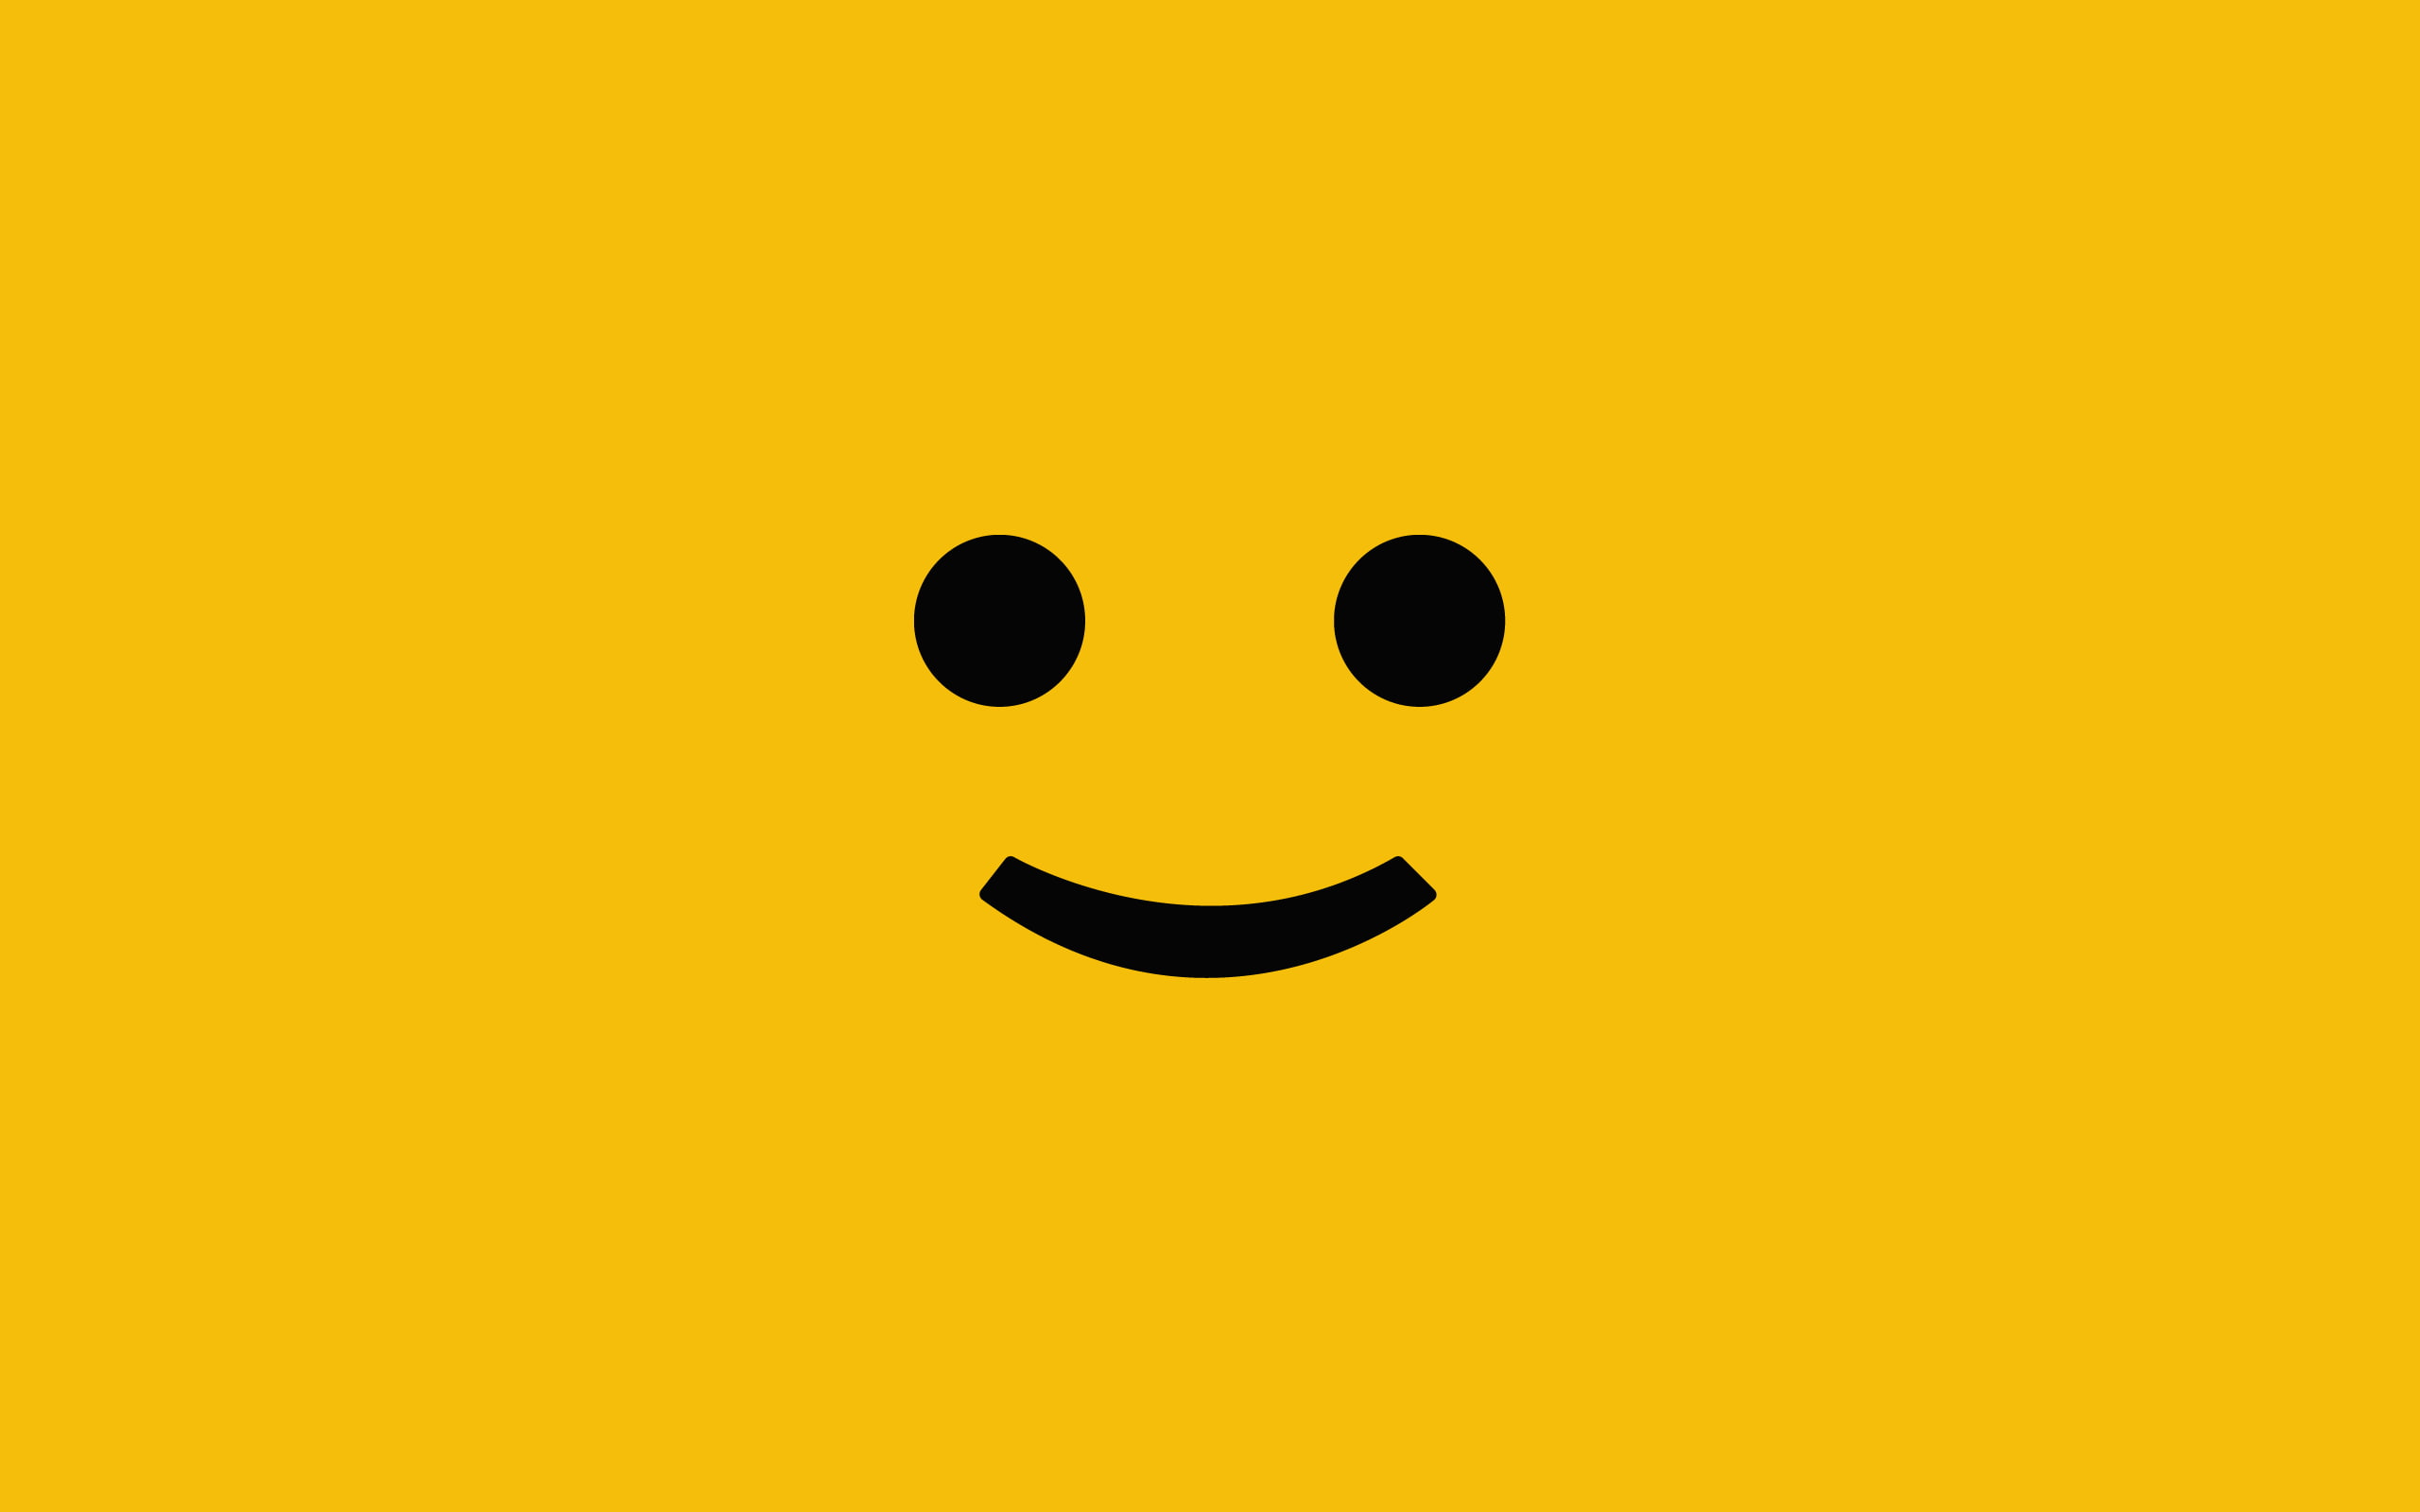 smiley face emoticon wallpaper, LEGO, minimalism, yellow, yellow background